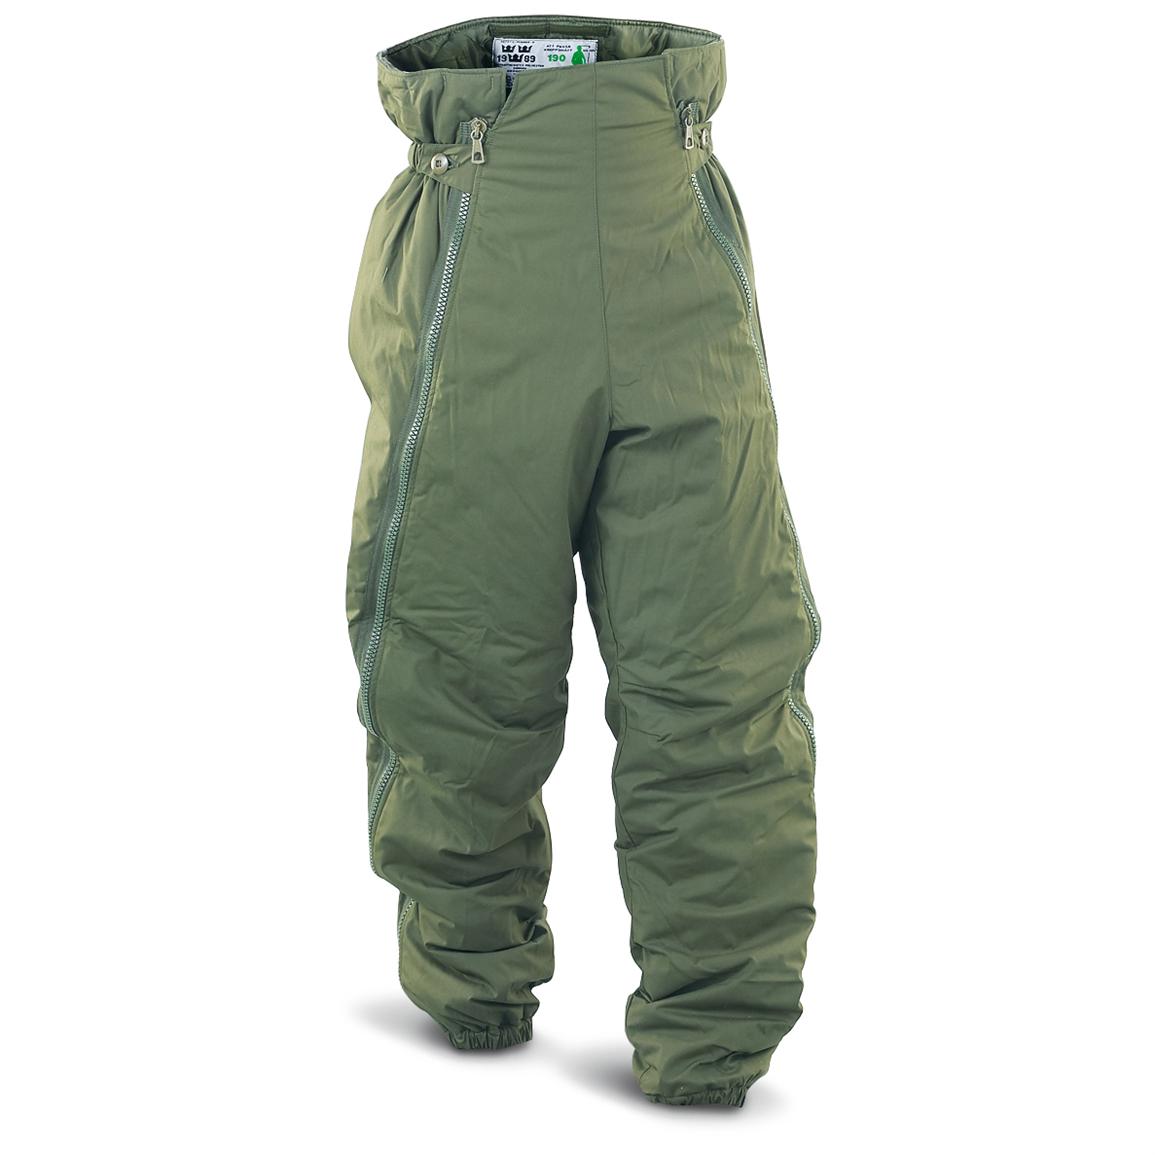 Swedish Military Surplus M90 Thermal Pants